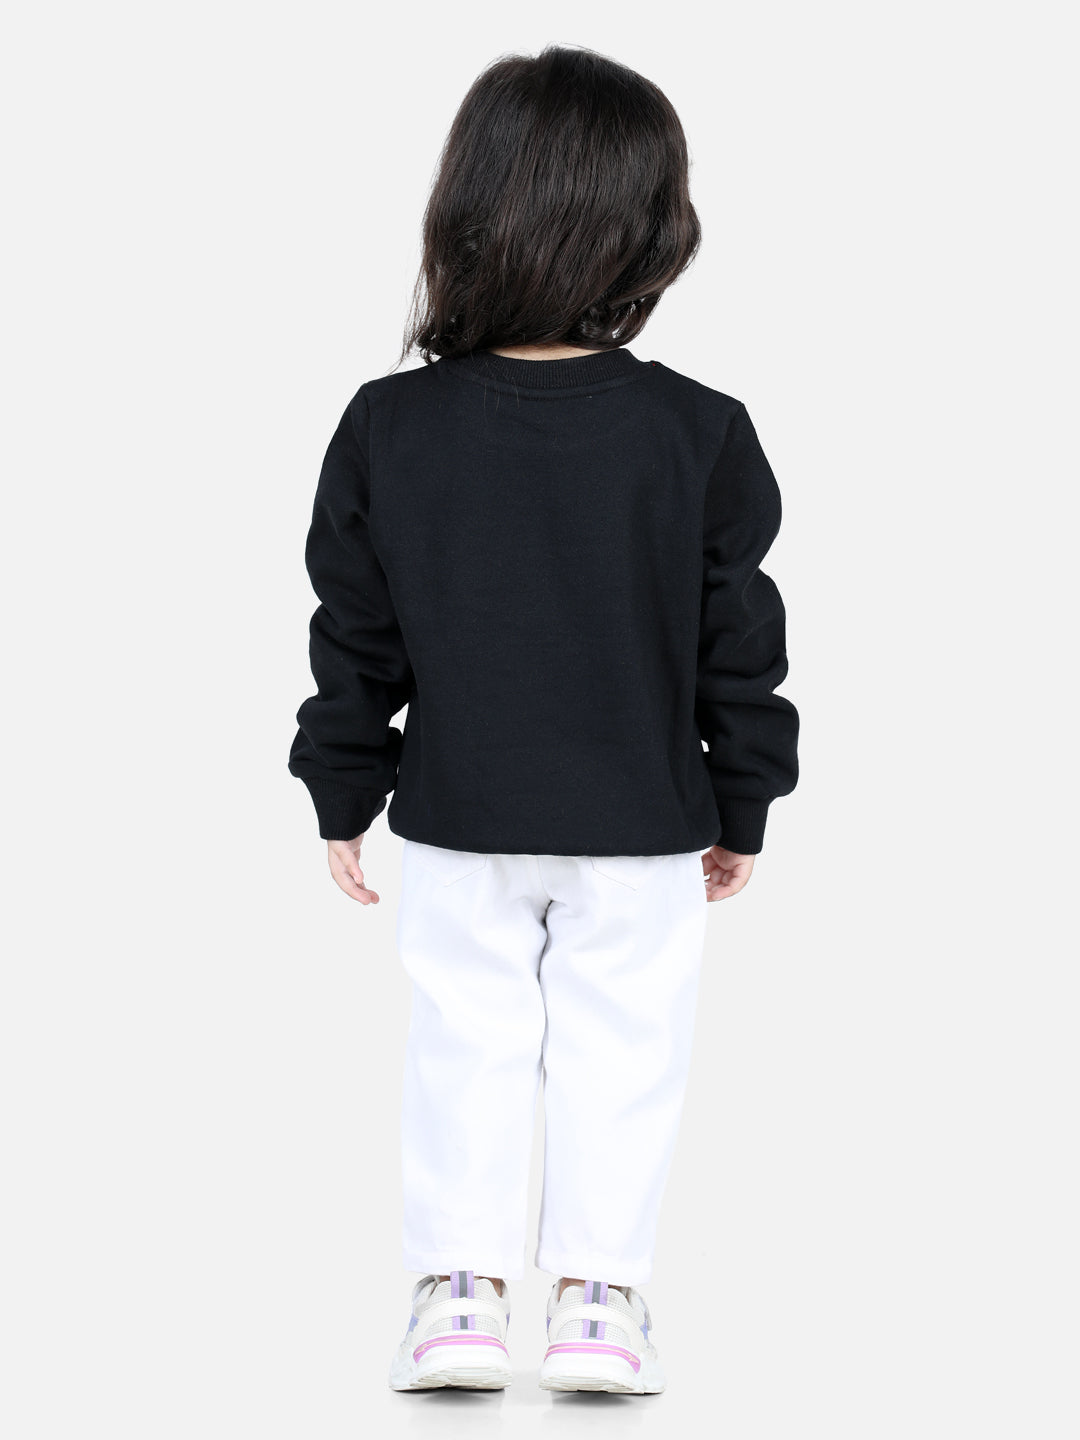 BownBee Full Sleeve Sweatshirt for Girls- Black